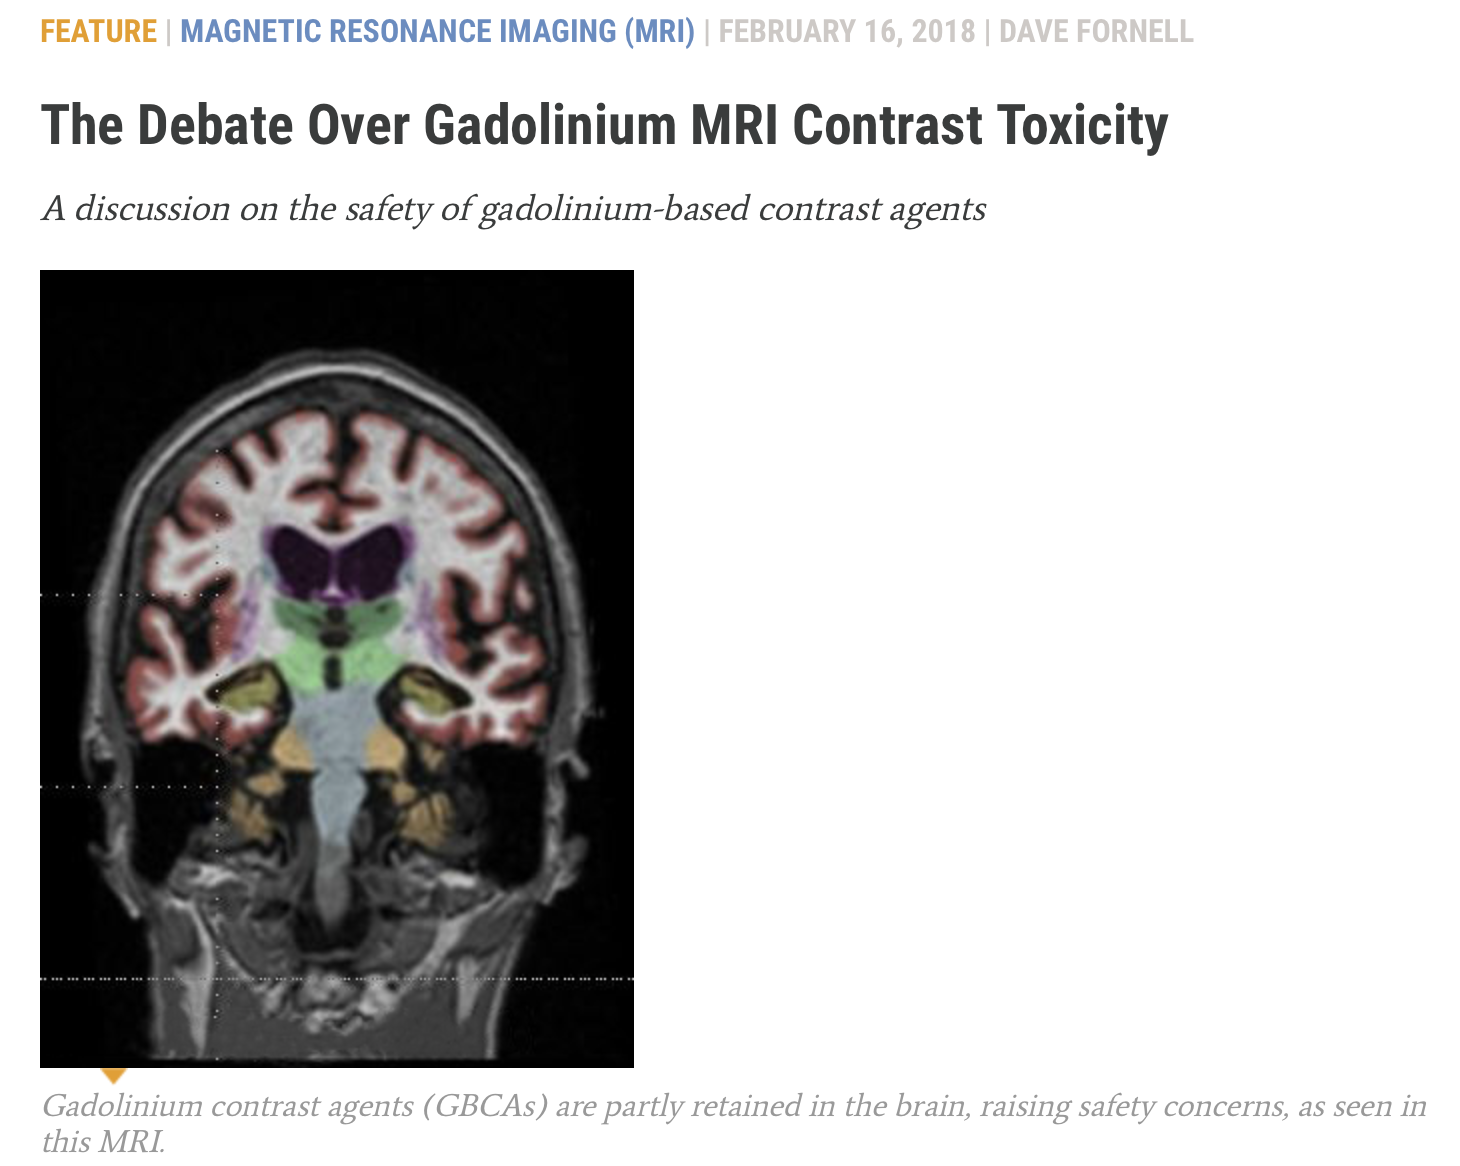 ITN: The Debate Over Gadolinium Toxicity